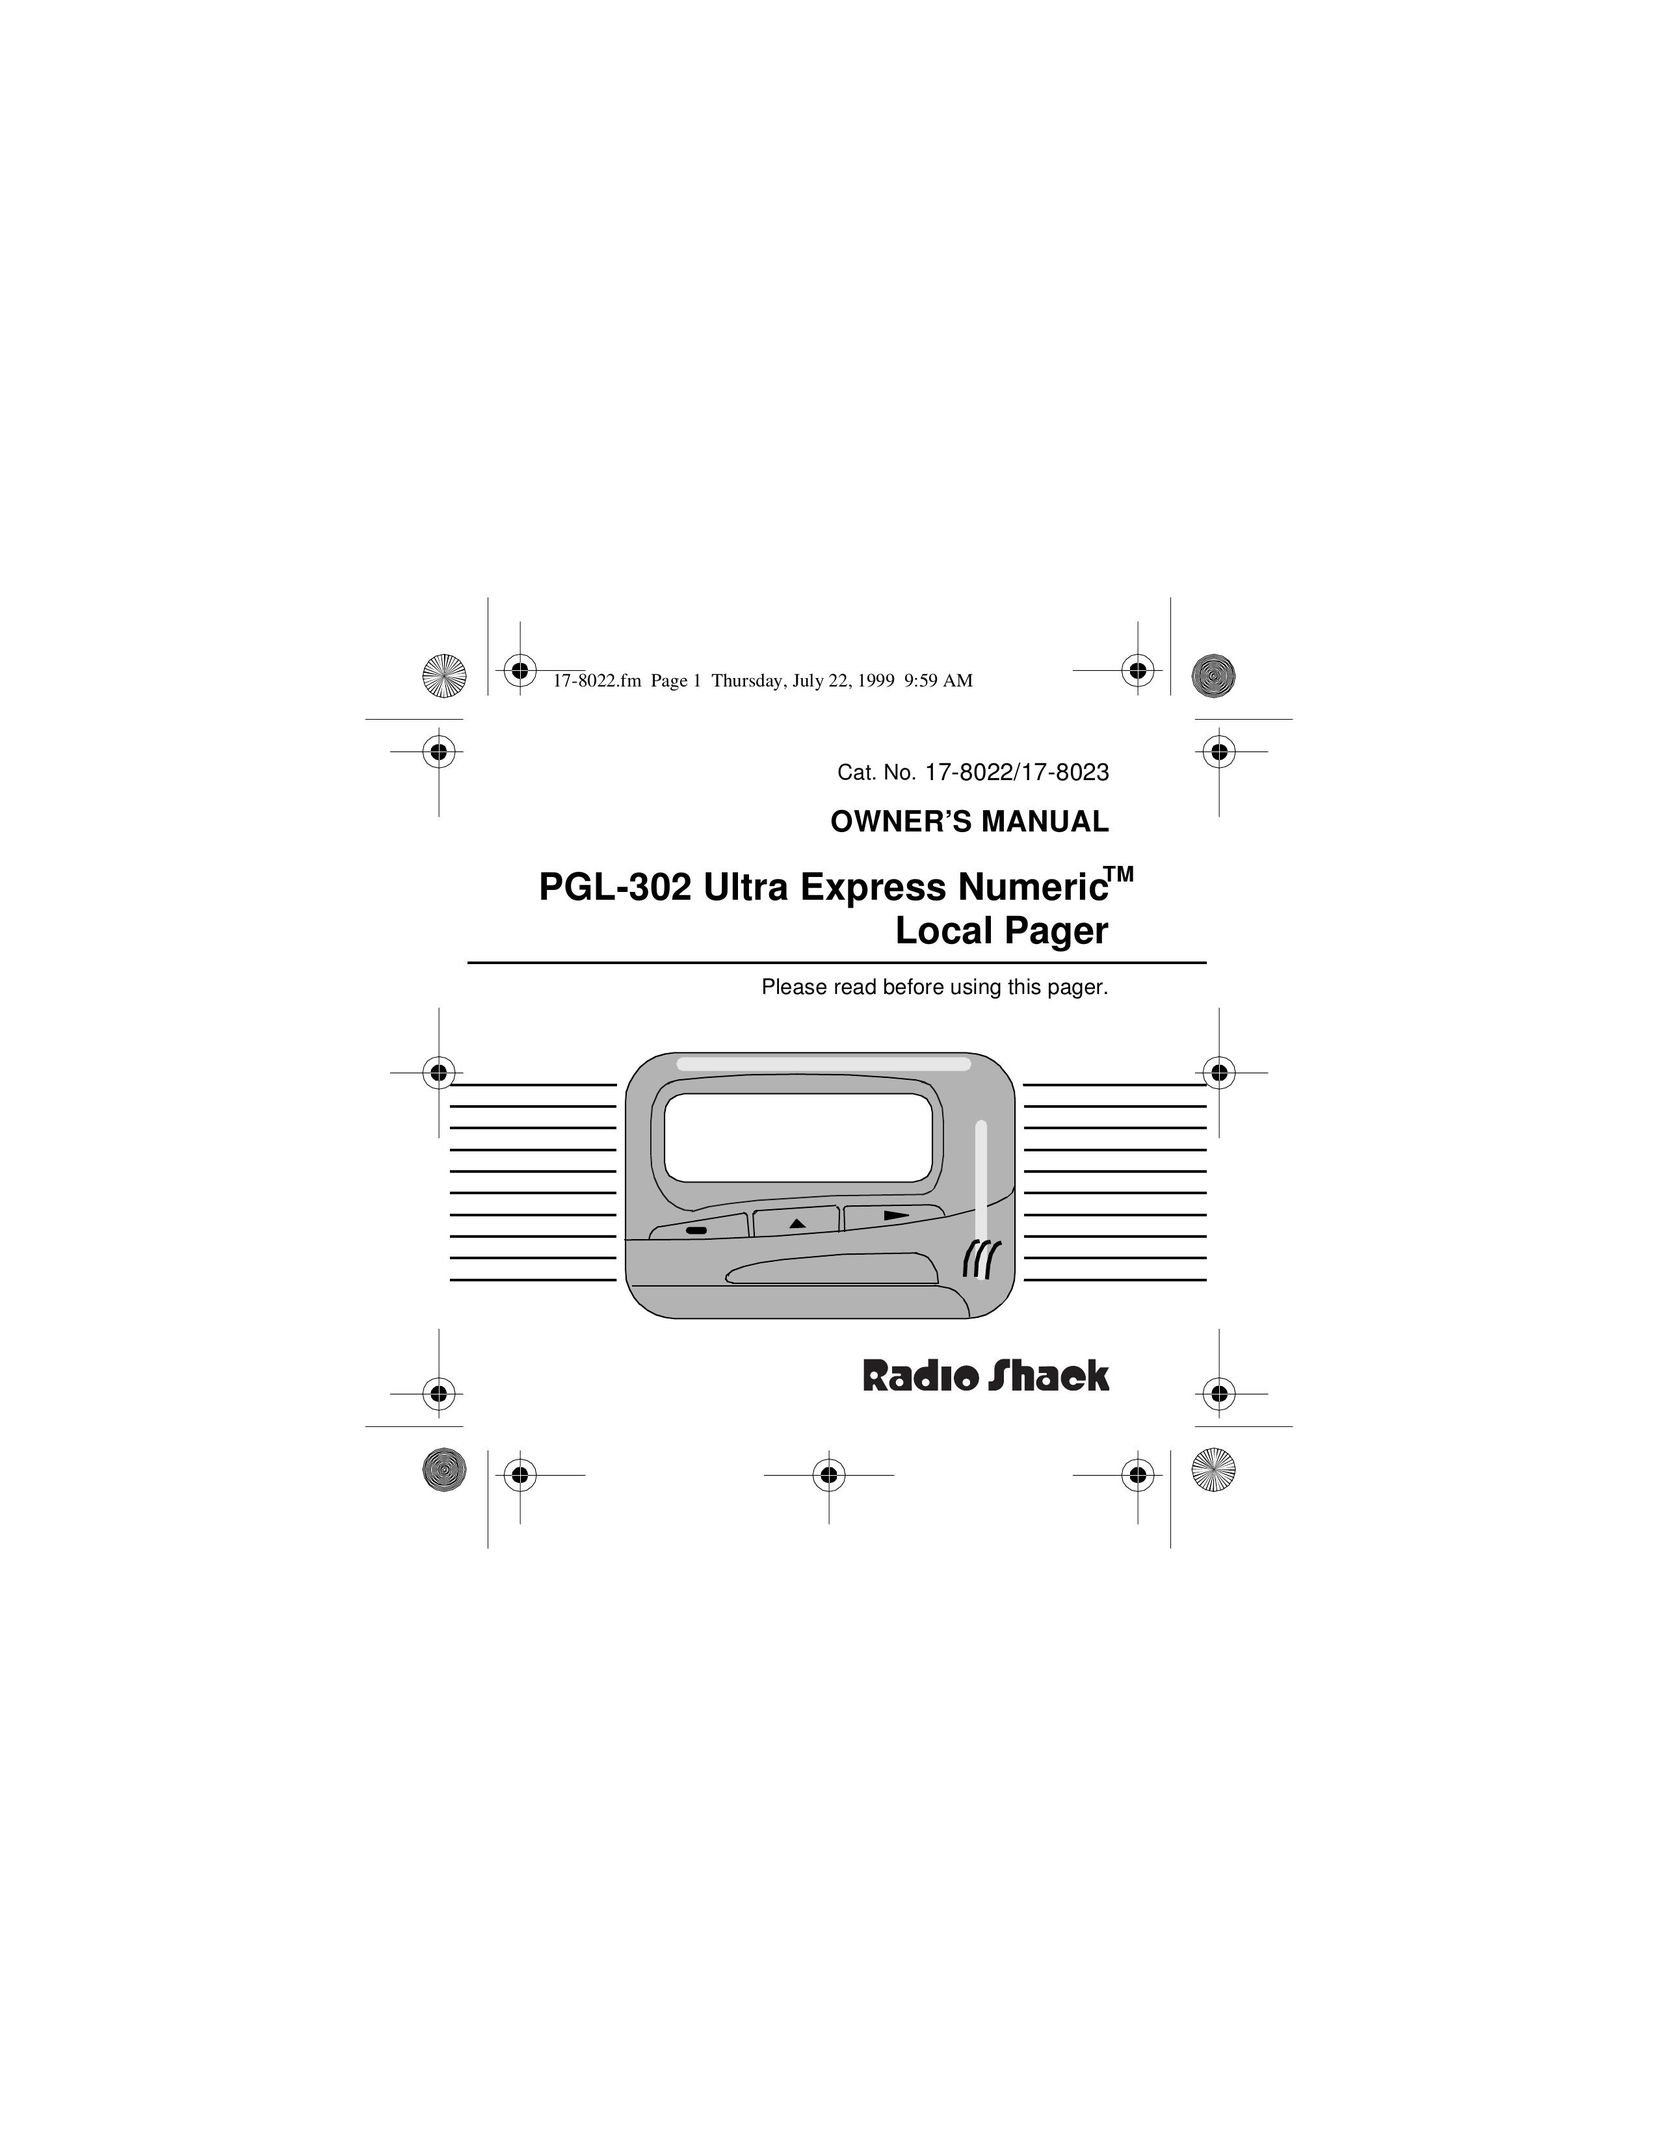 Radio Shack 17-8022 Pager User Manual